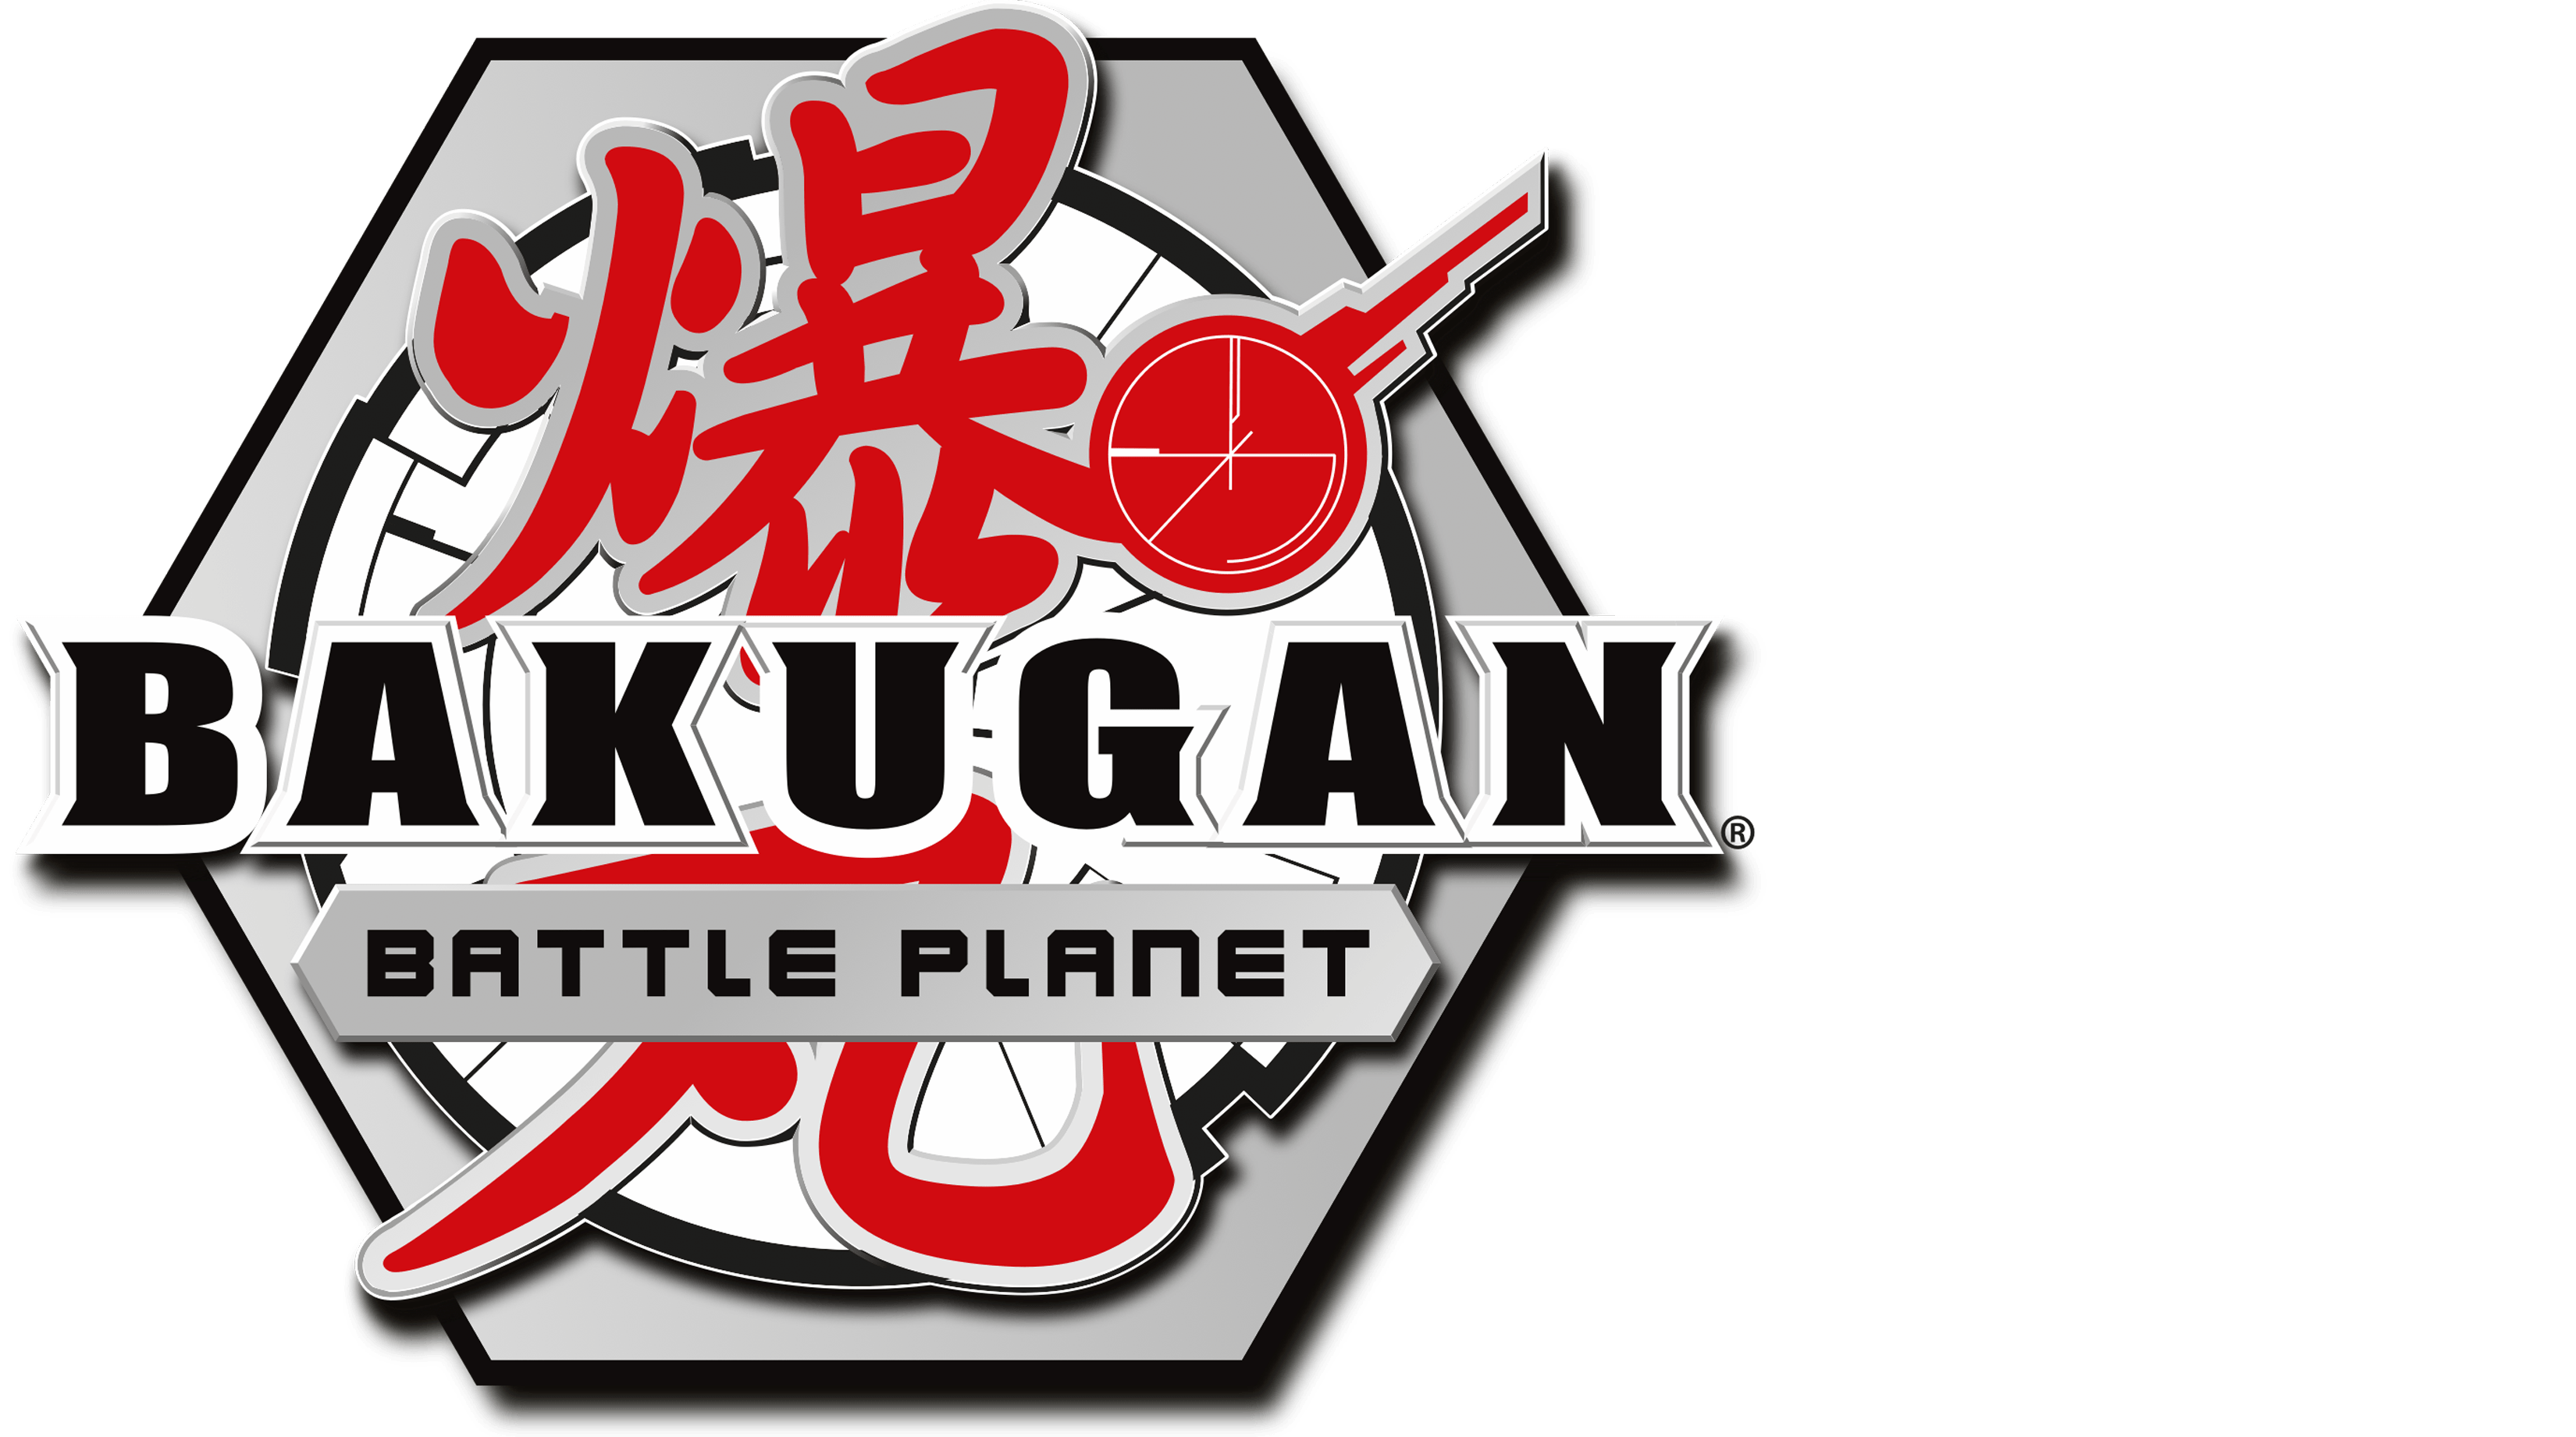 Bakugan Logo - Bakugan Battle Planet. Games, videos and Downloads